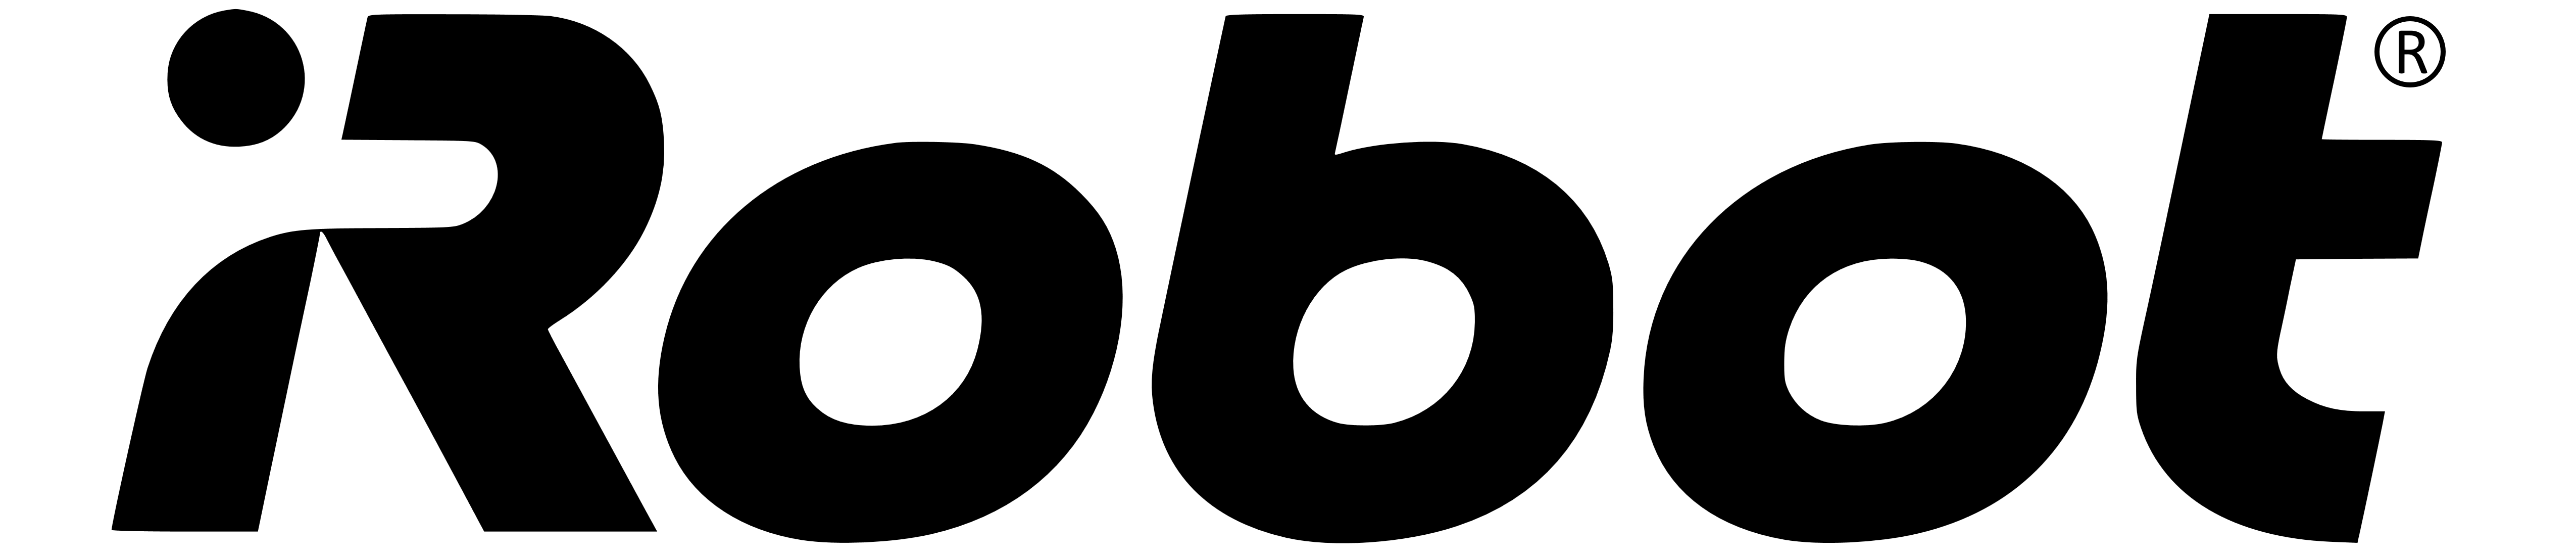 iRobot logo black